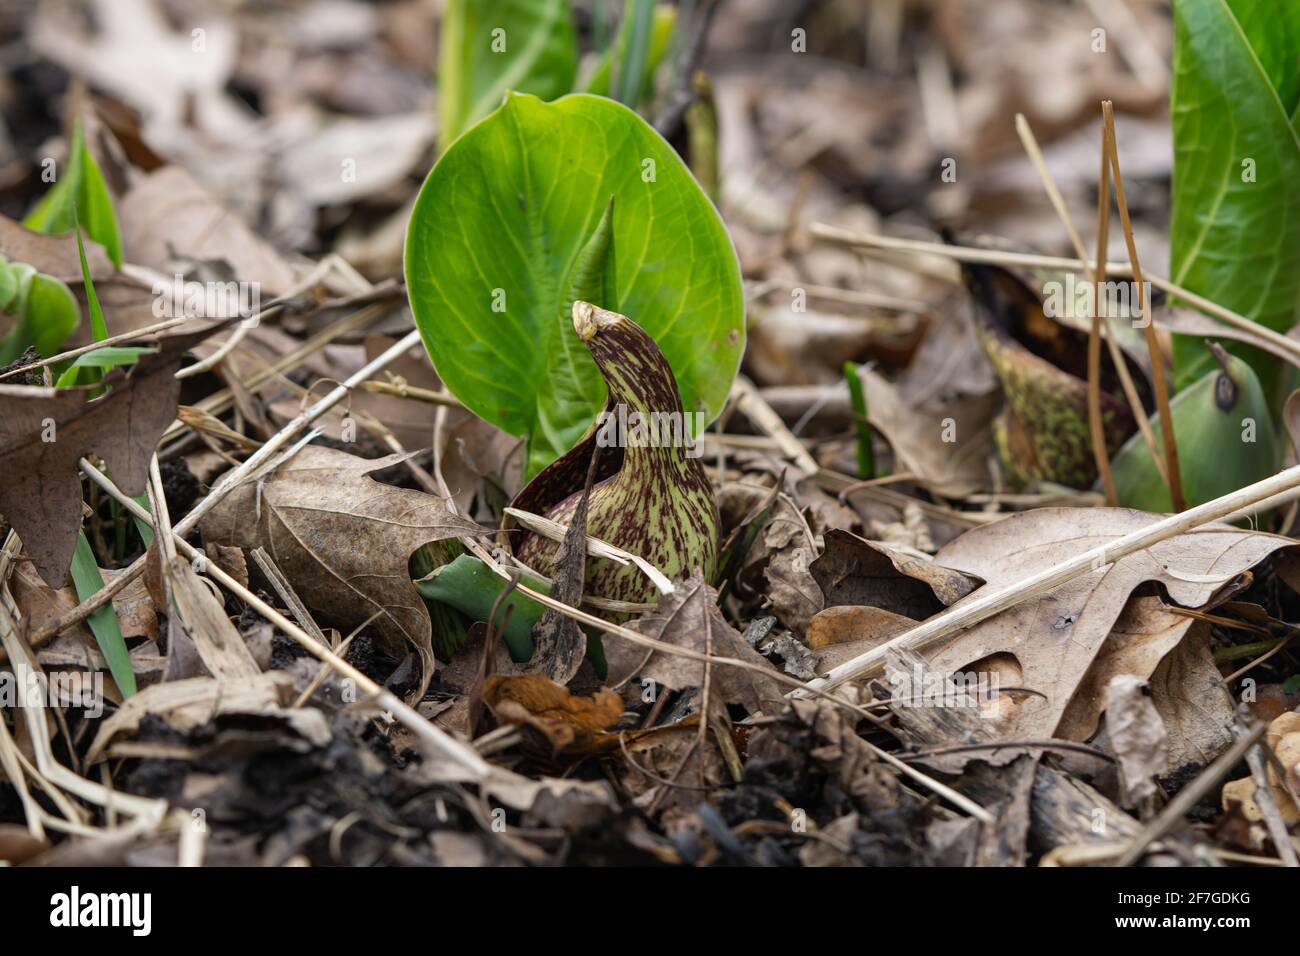 Eastern Skunk Cabbage Emerging in Springtime Stock Photo